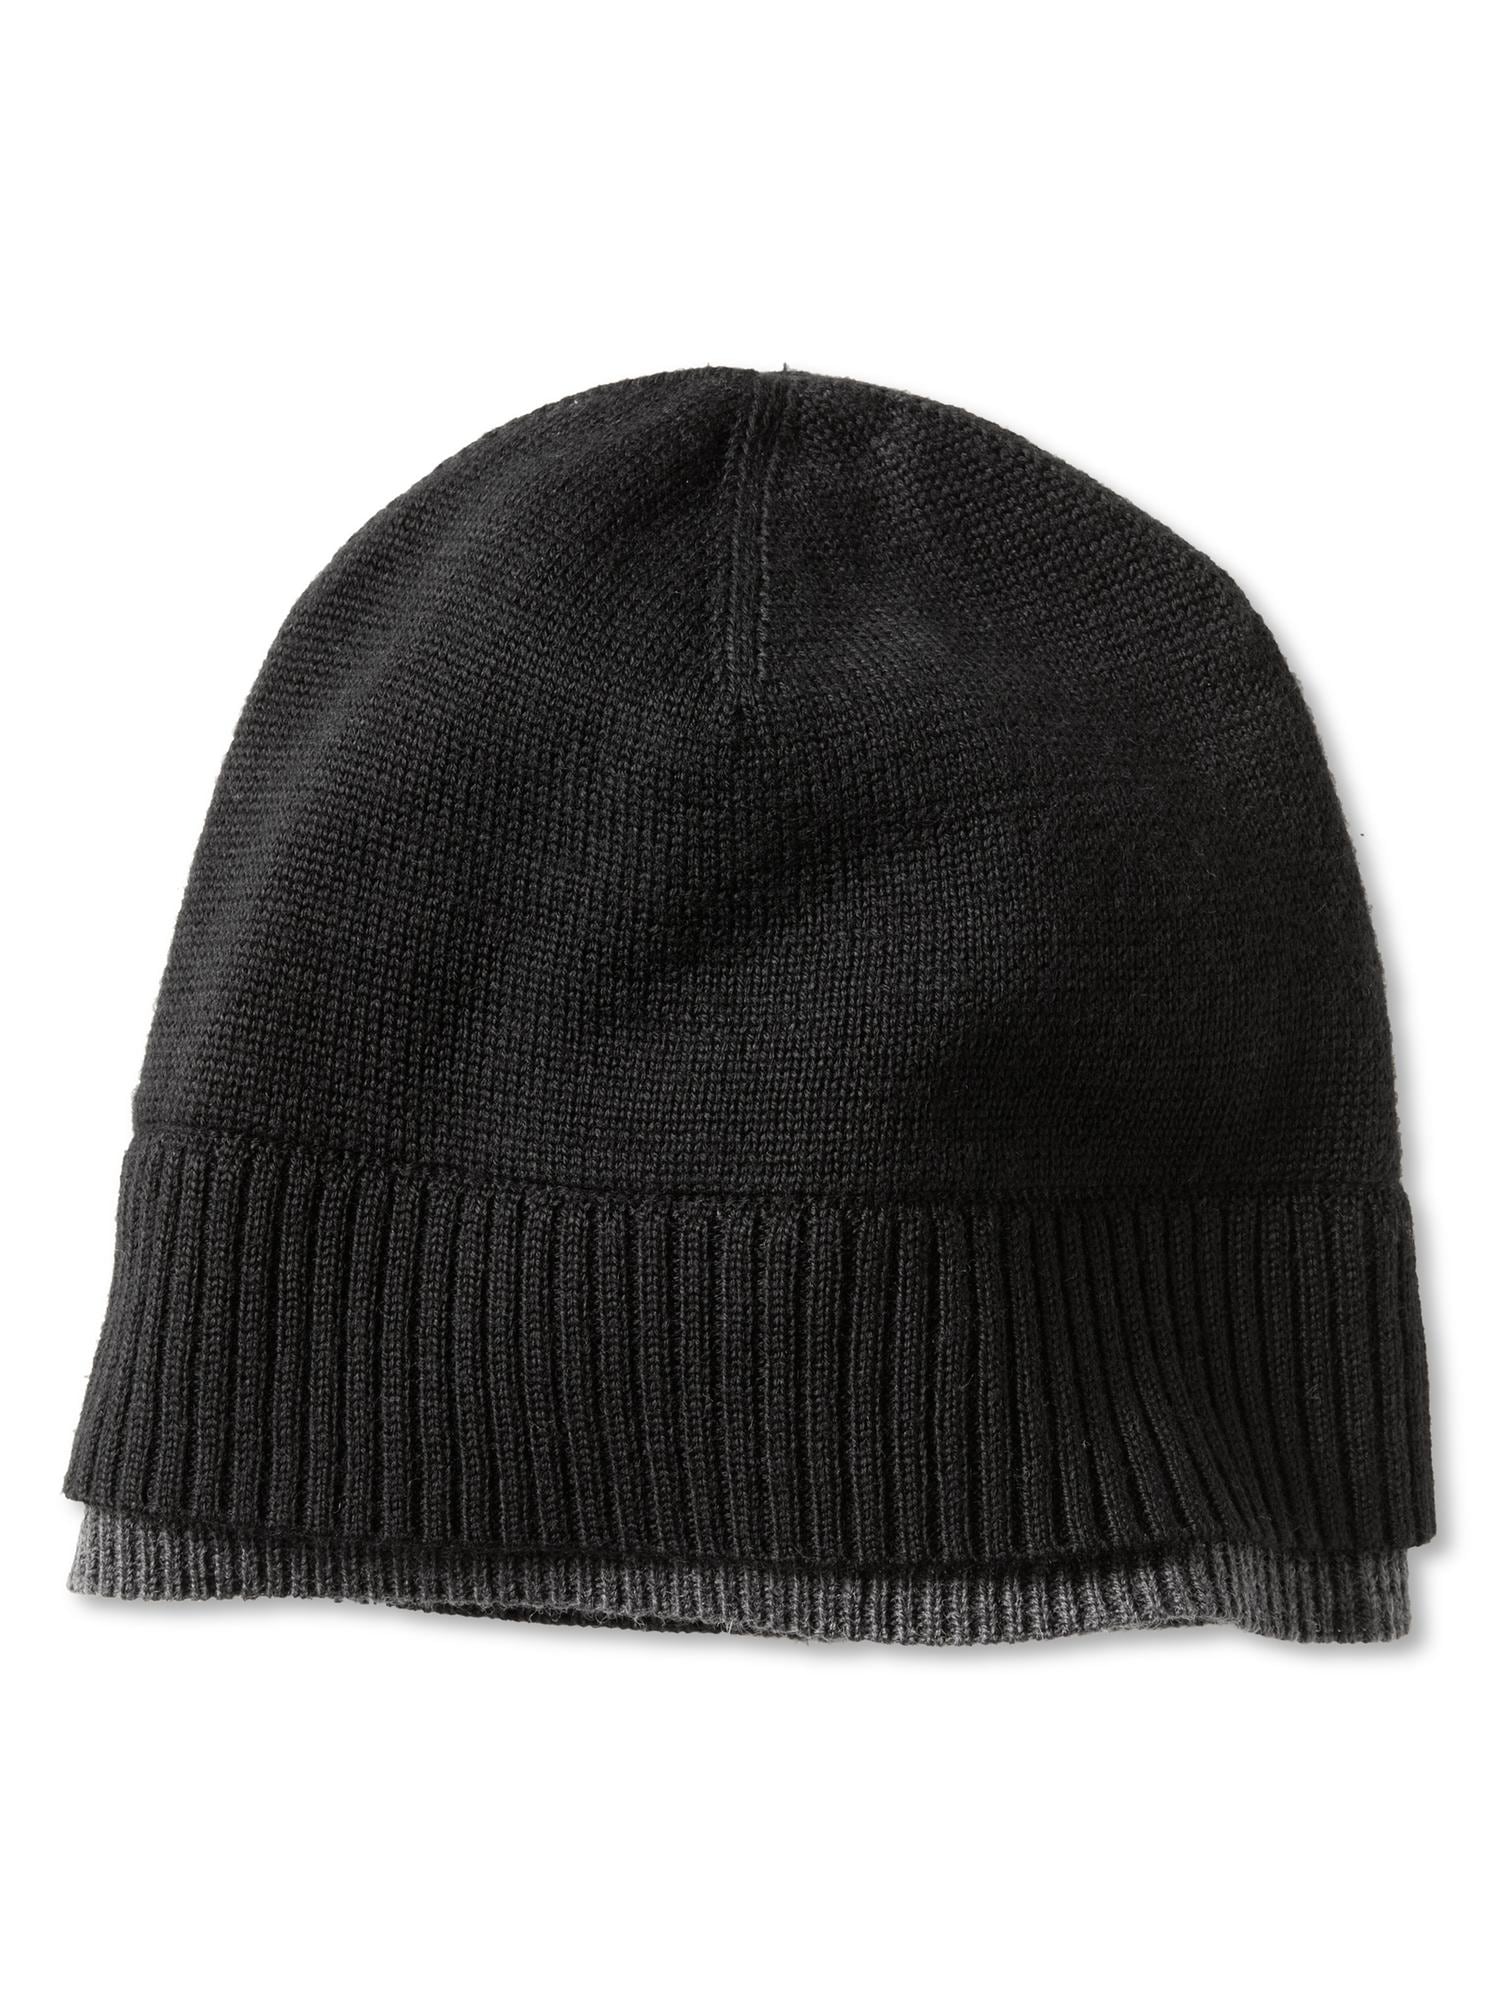 Reversible knit cap